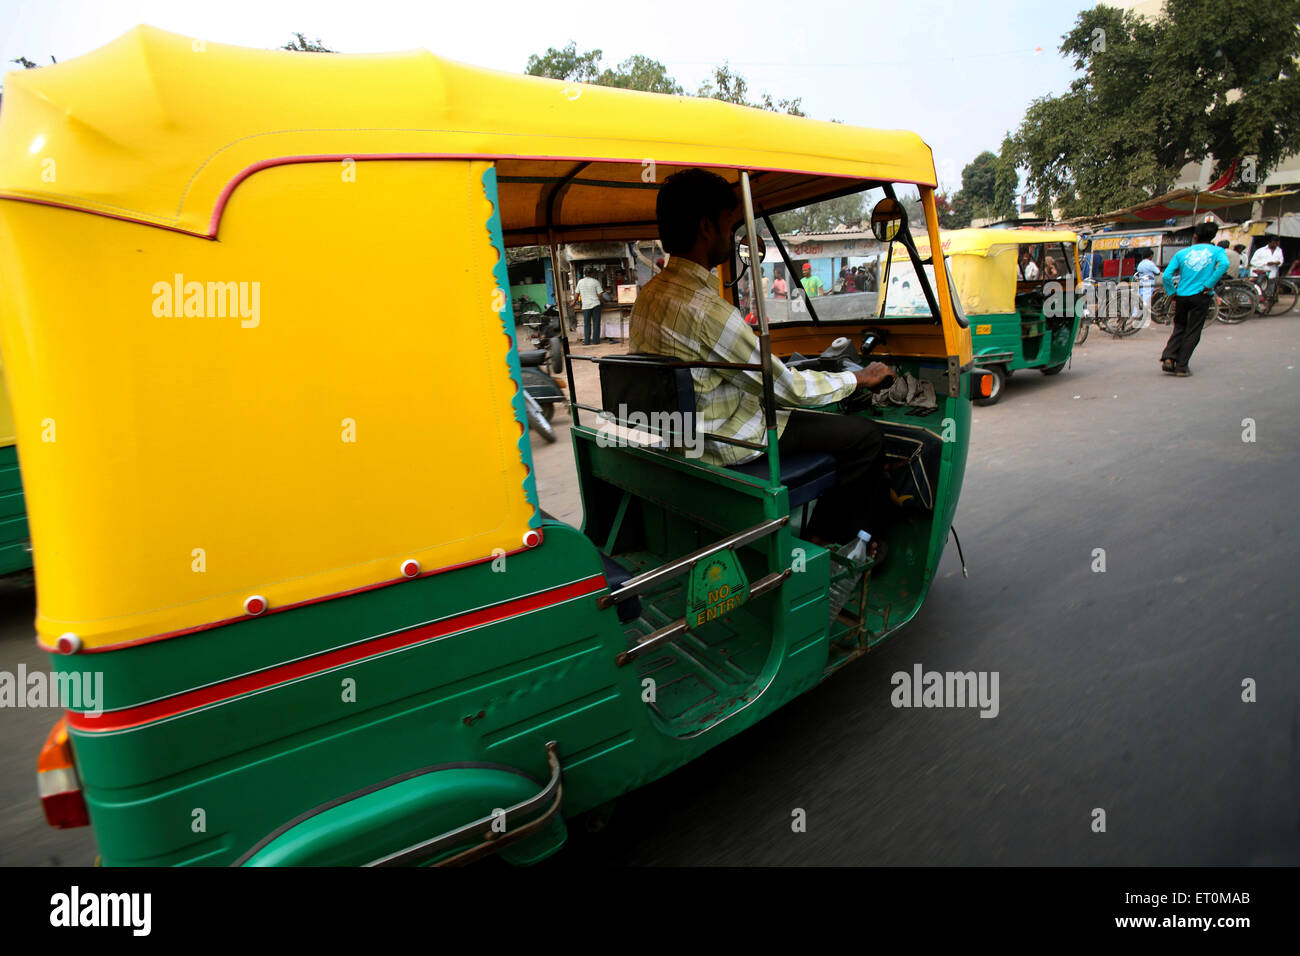 Auto rickshaw driver, India Stock Photo